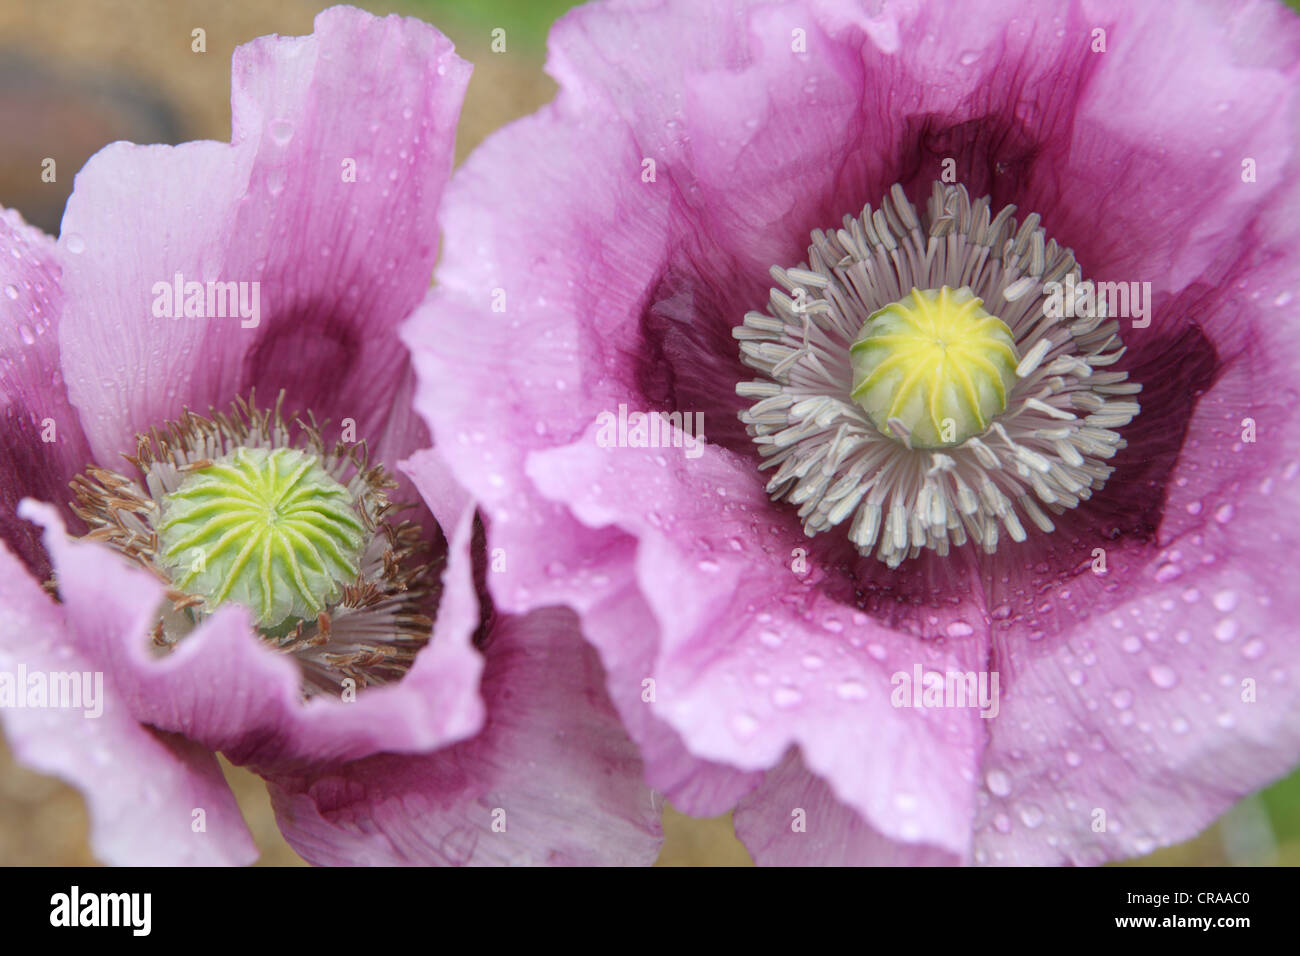 Violett, rosa, lila, Mohn, close-up Blüte mit Regen Tropfen Formen in der Natur, Suffolk, England, UK Stockfoto